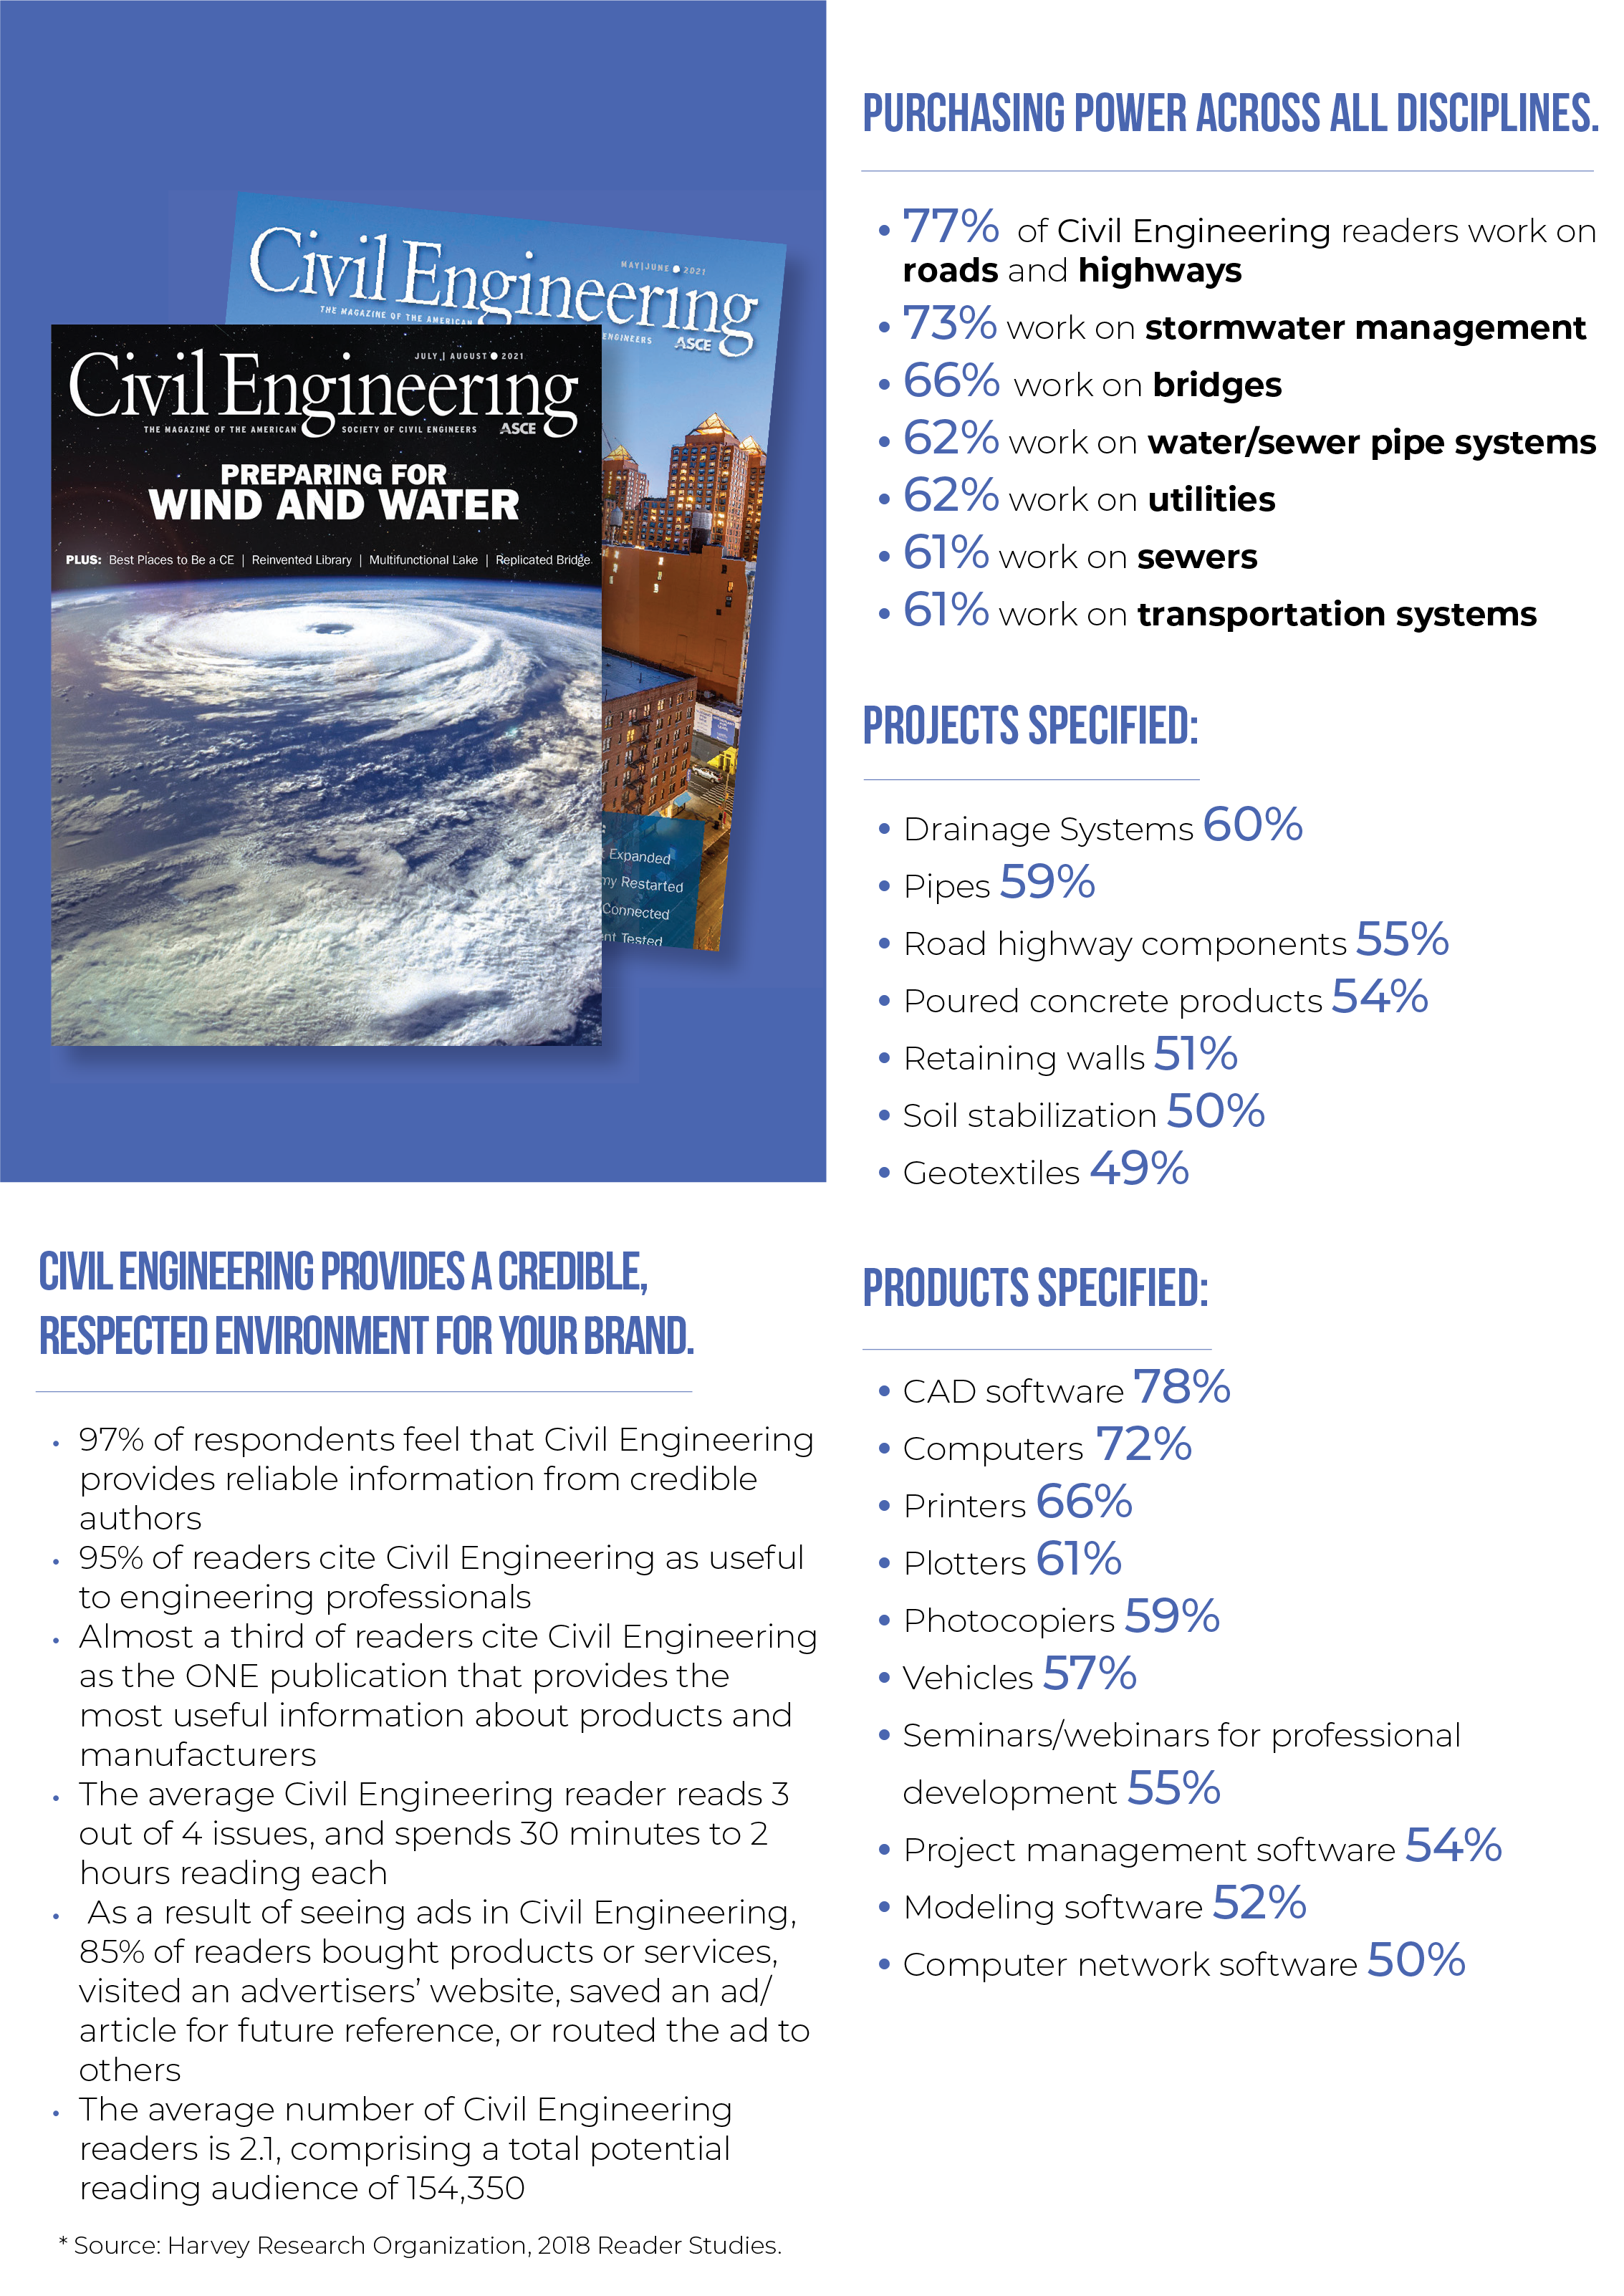 CE magazine reader information page 2